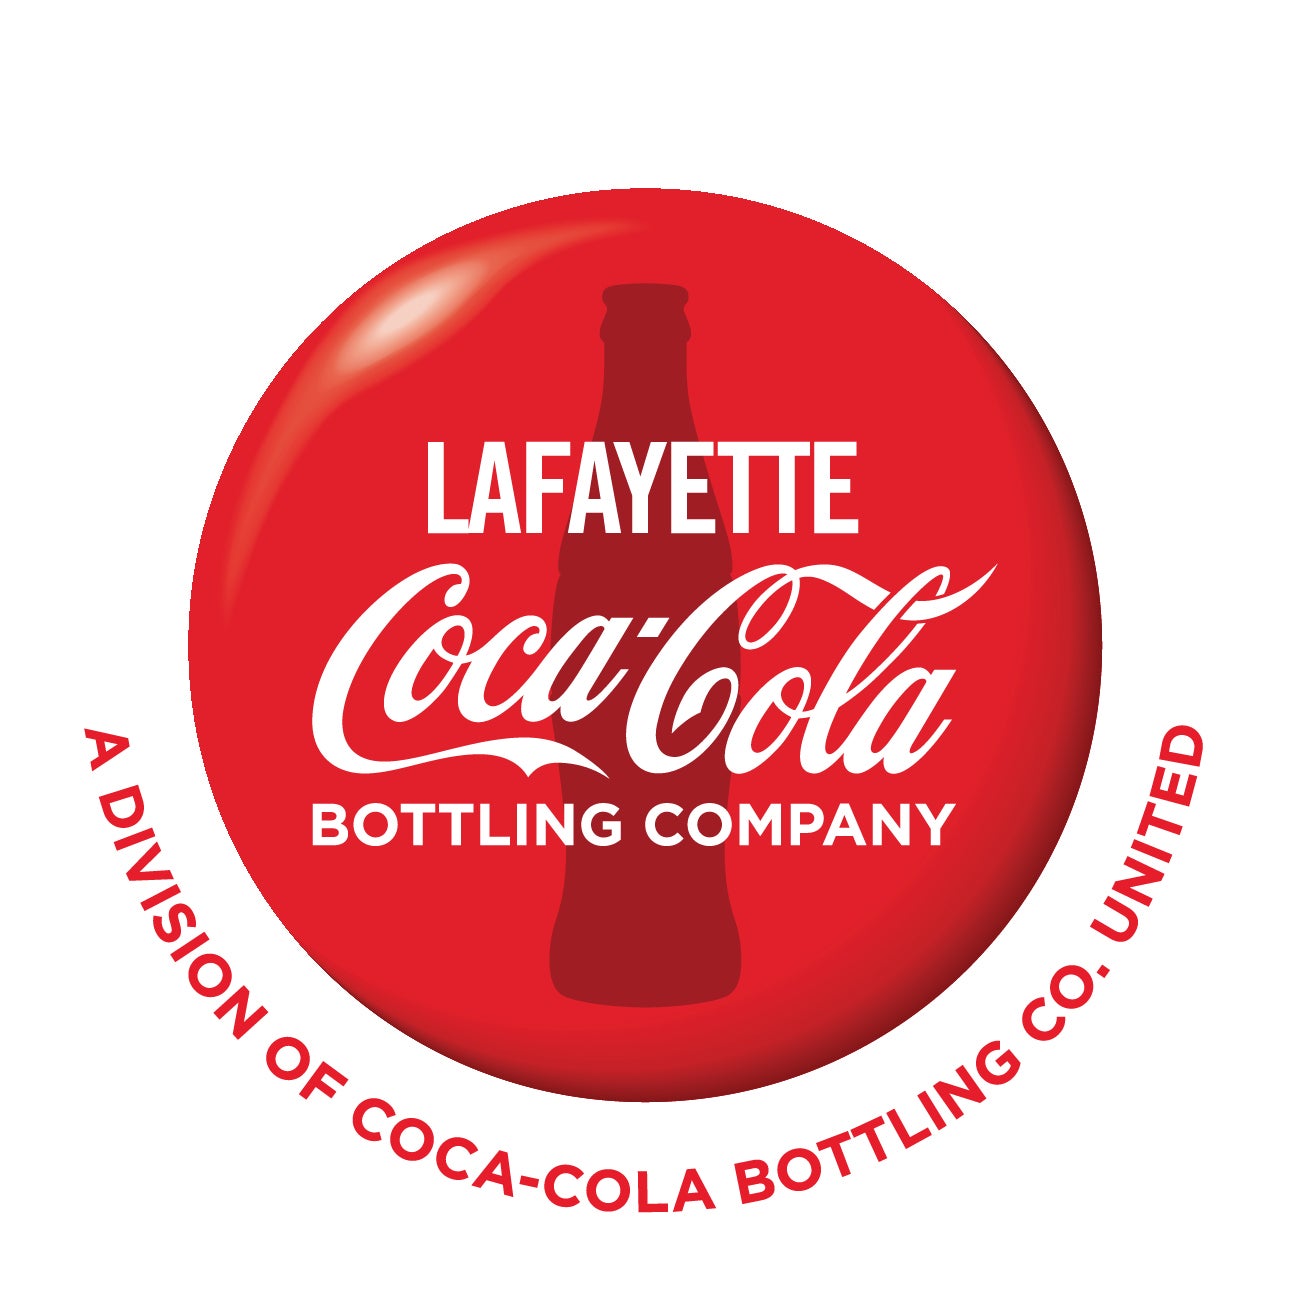 Lafayette Coca-Cola Logo 080416.jpg